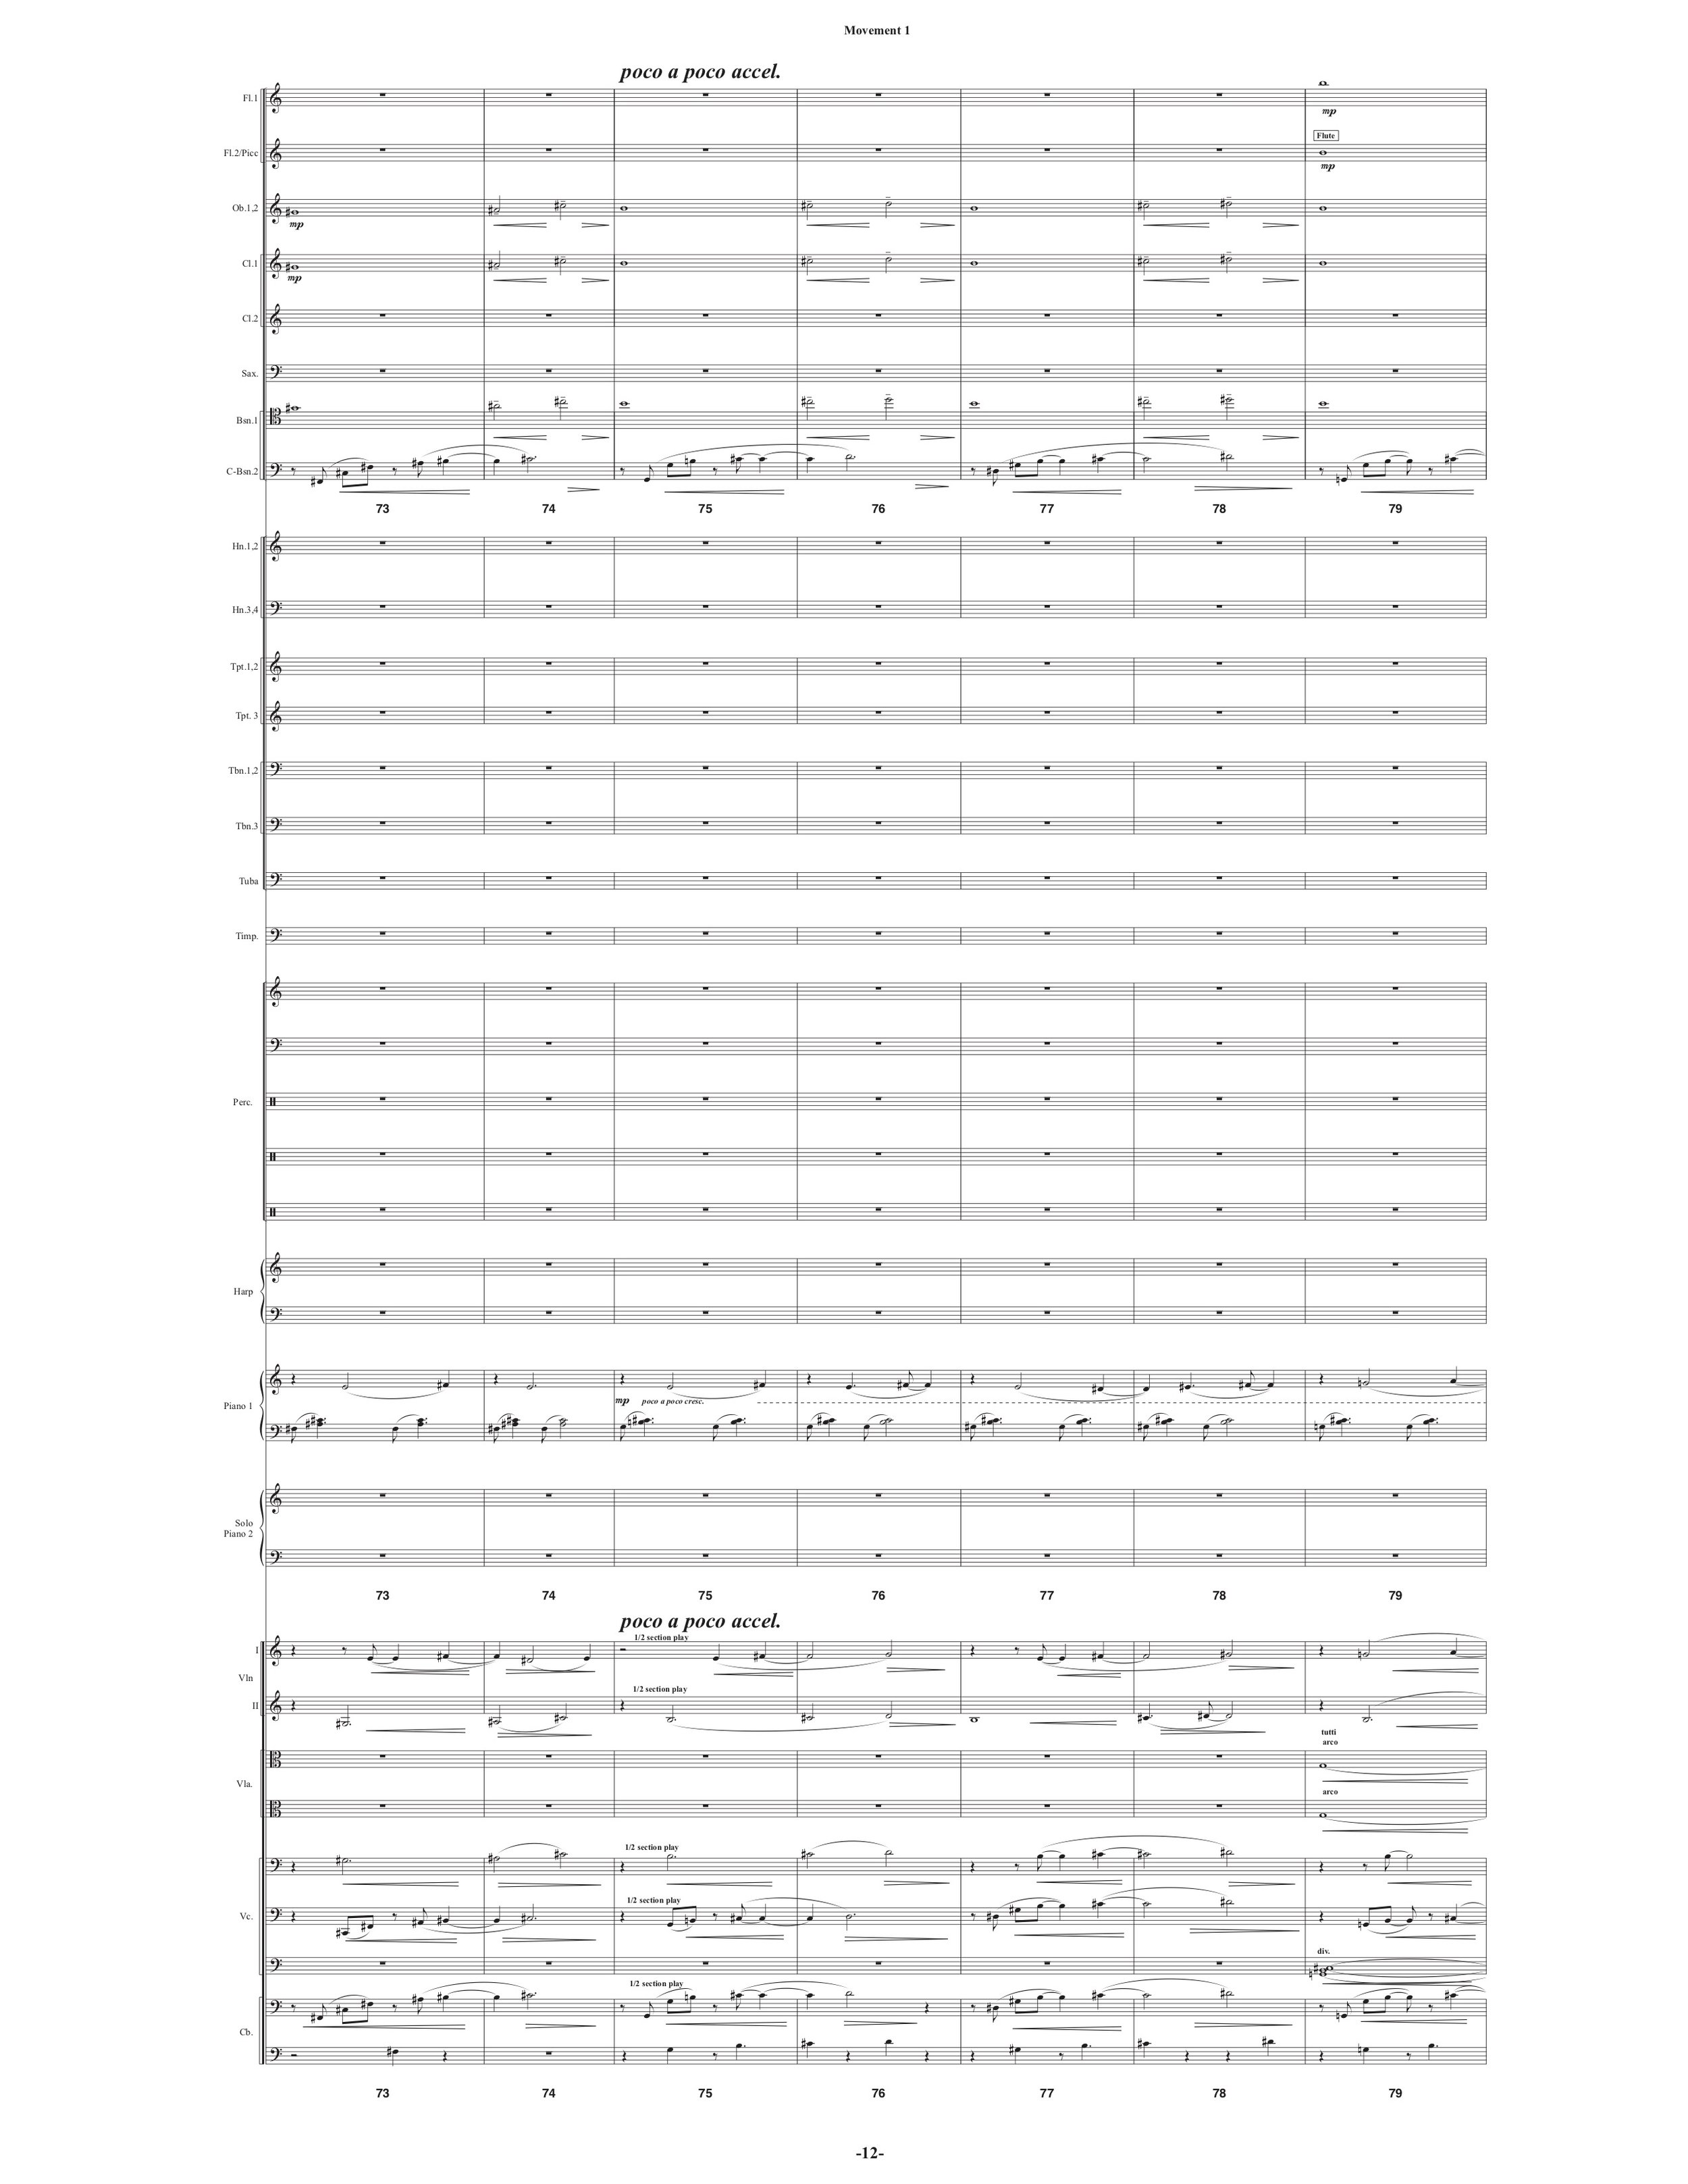 Symphony_Orch & 2 Pianos p17.jpg